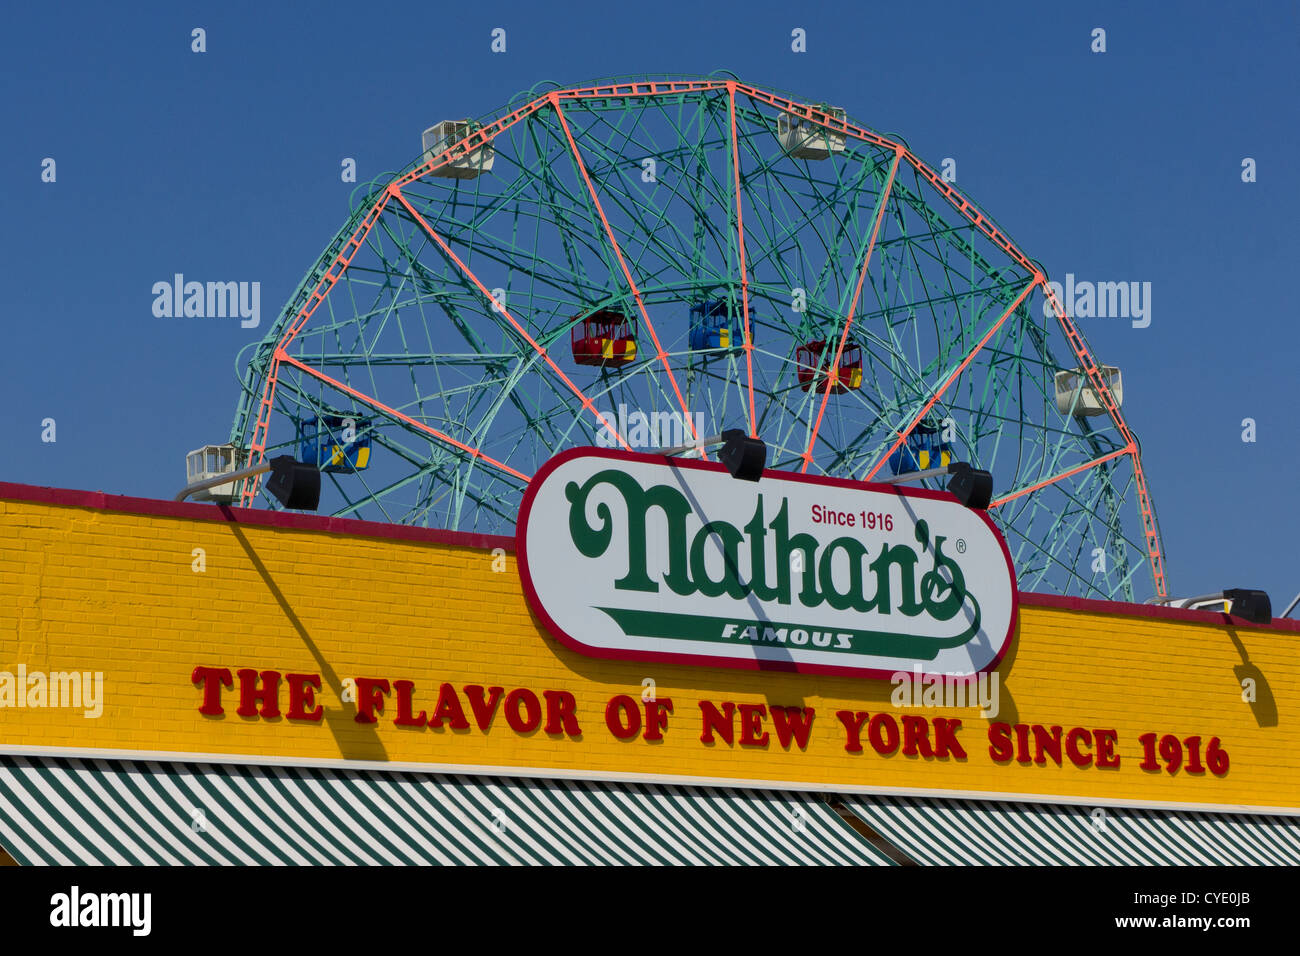 Wonder wheel in Astroland amusement park on Coney Island,with Nathans famous hot dog restaurant New York,New York,United States Stock Photo